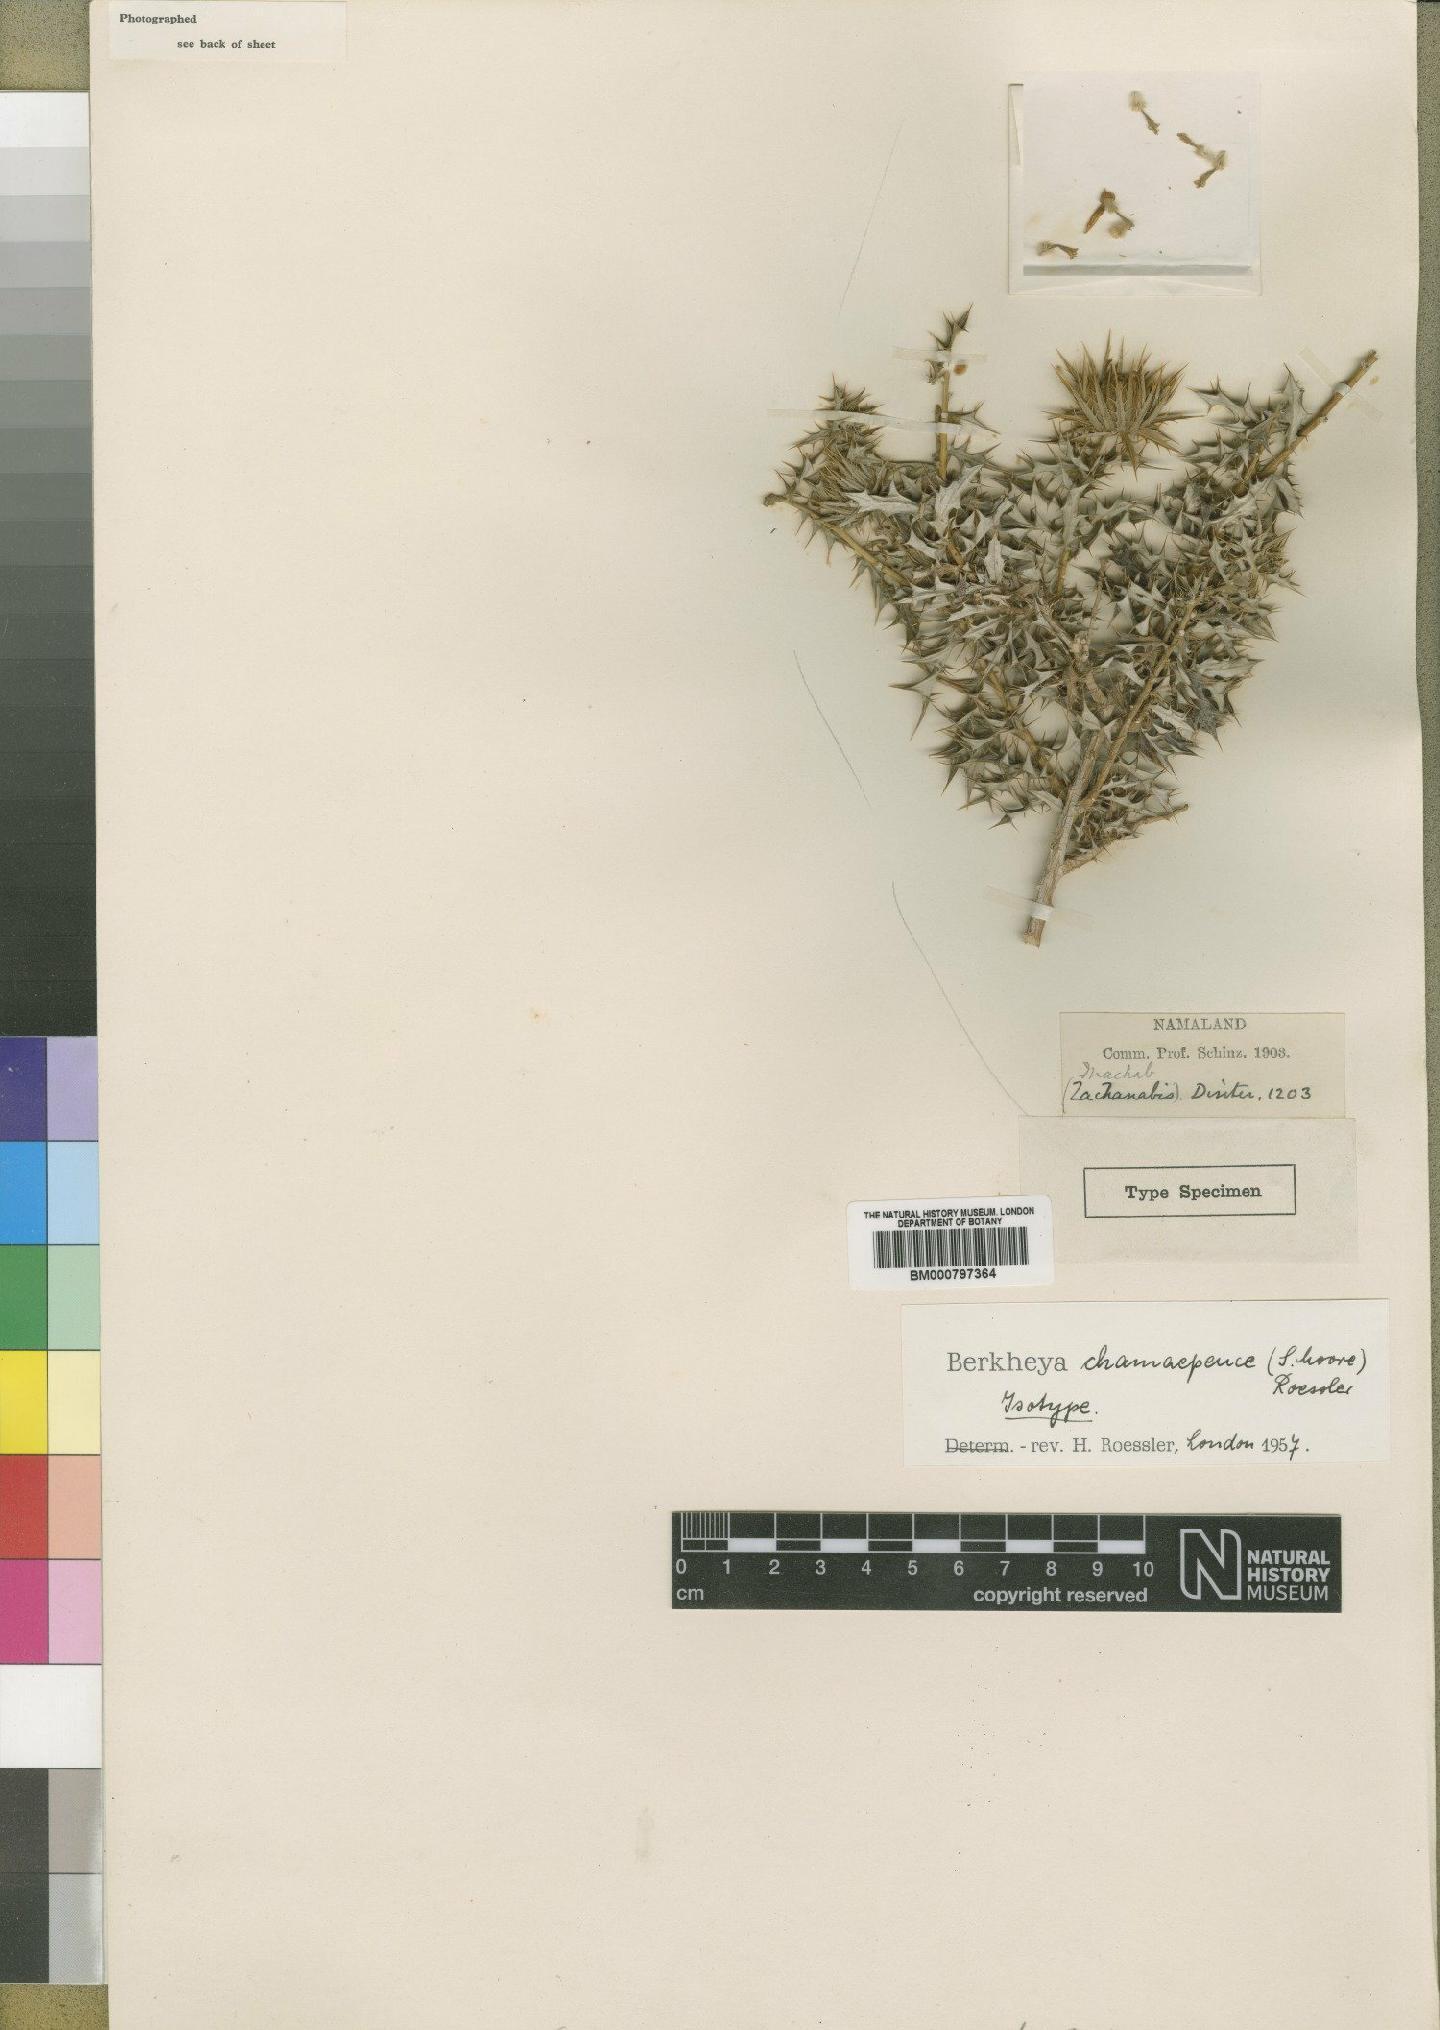 To NHMUK collection (Berkheya chamaepeuce (Moore) Roessler; Isotype; NHMUK:ecatalogue:4553136)